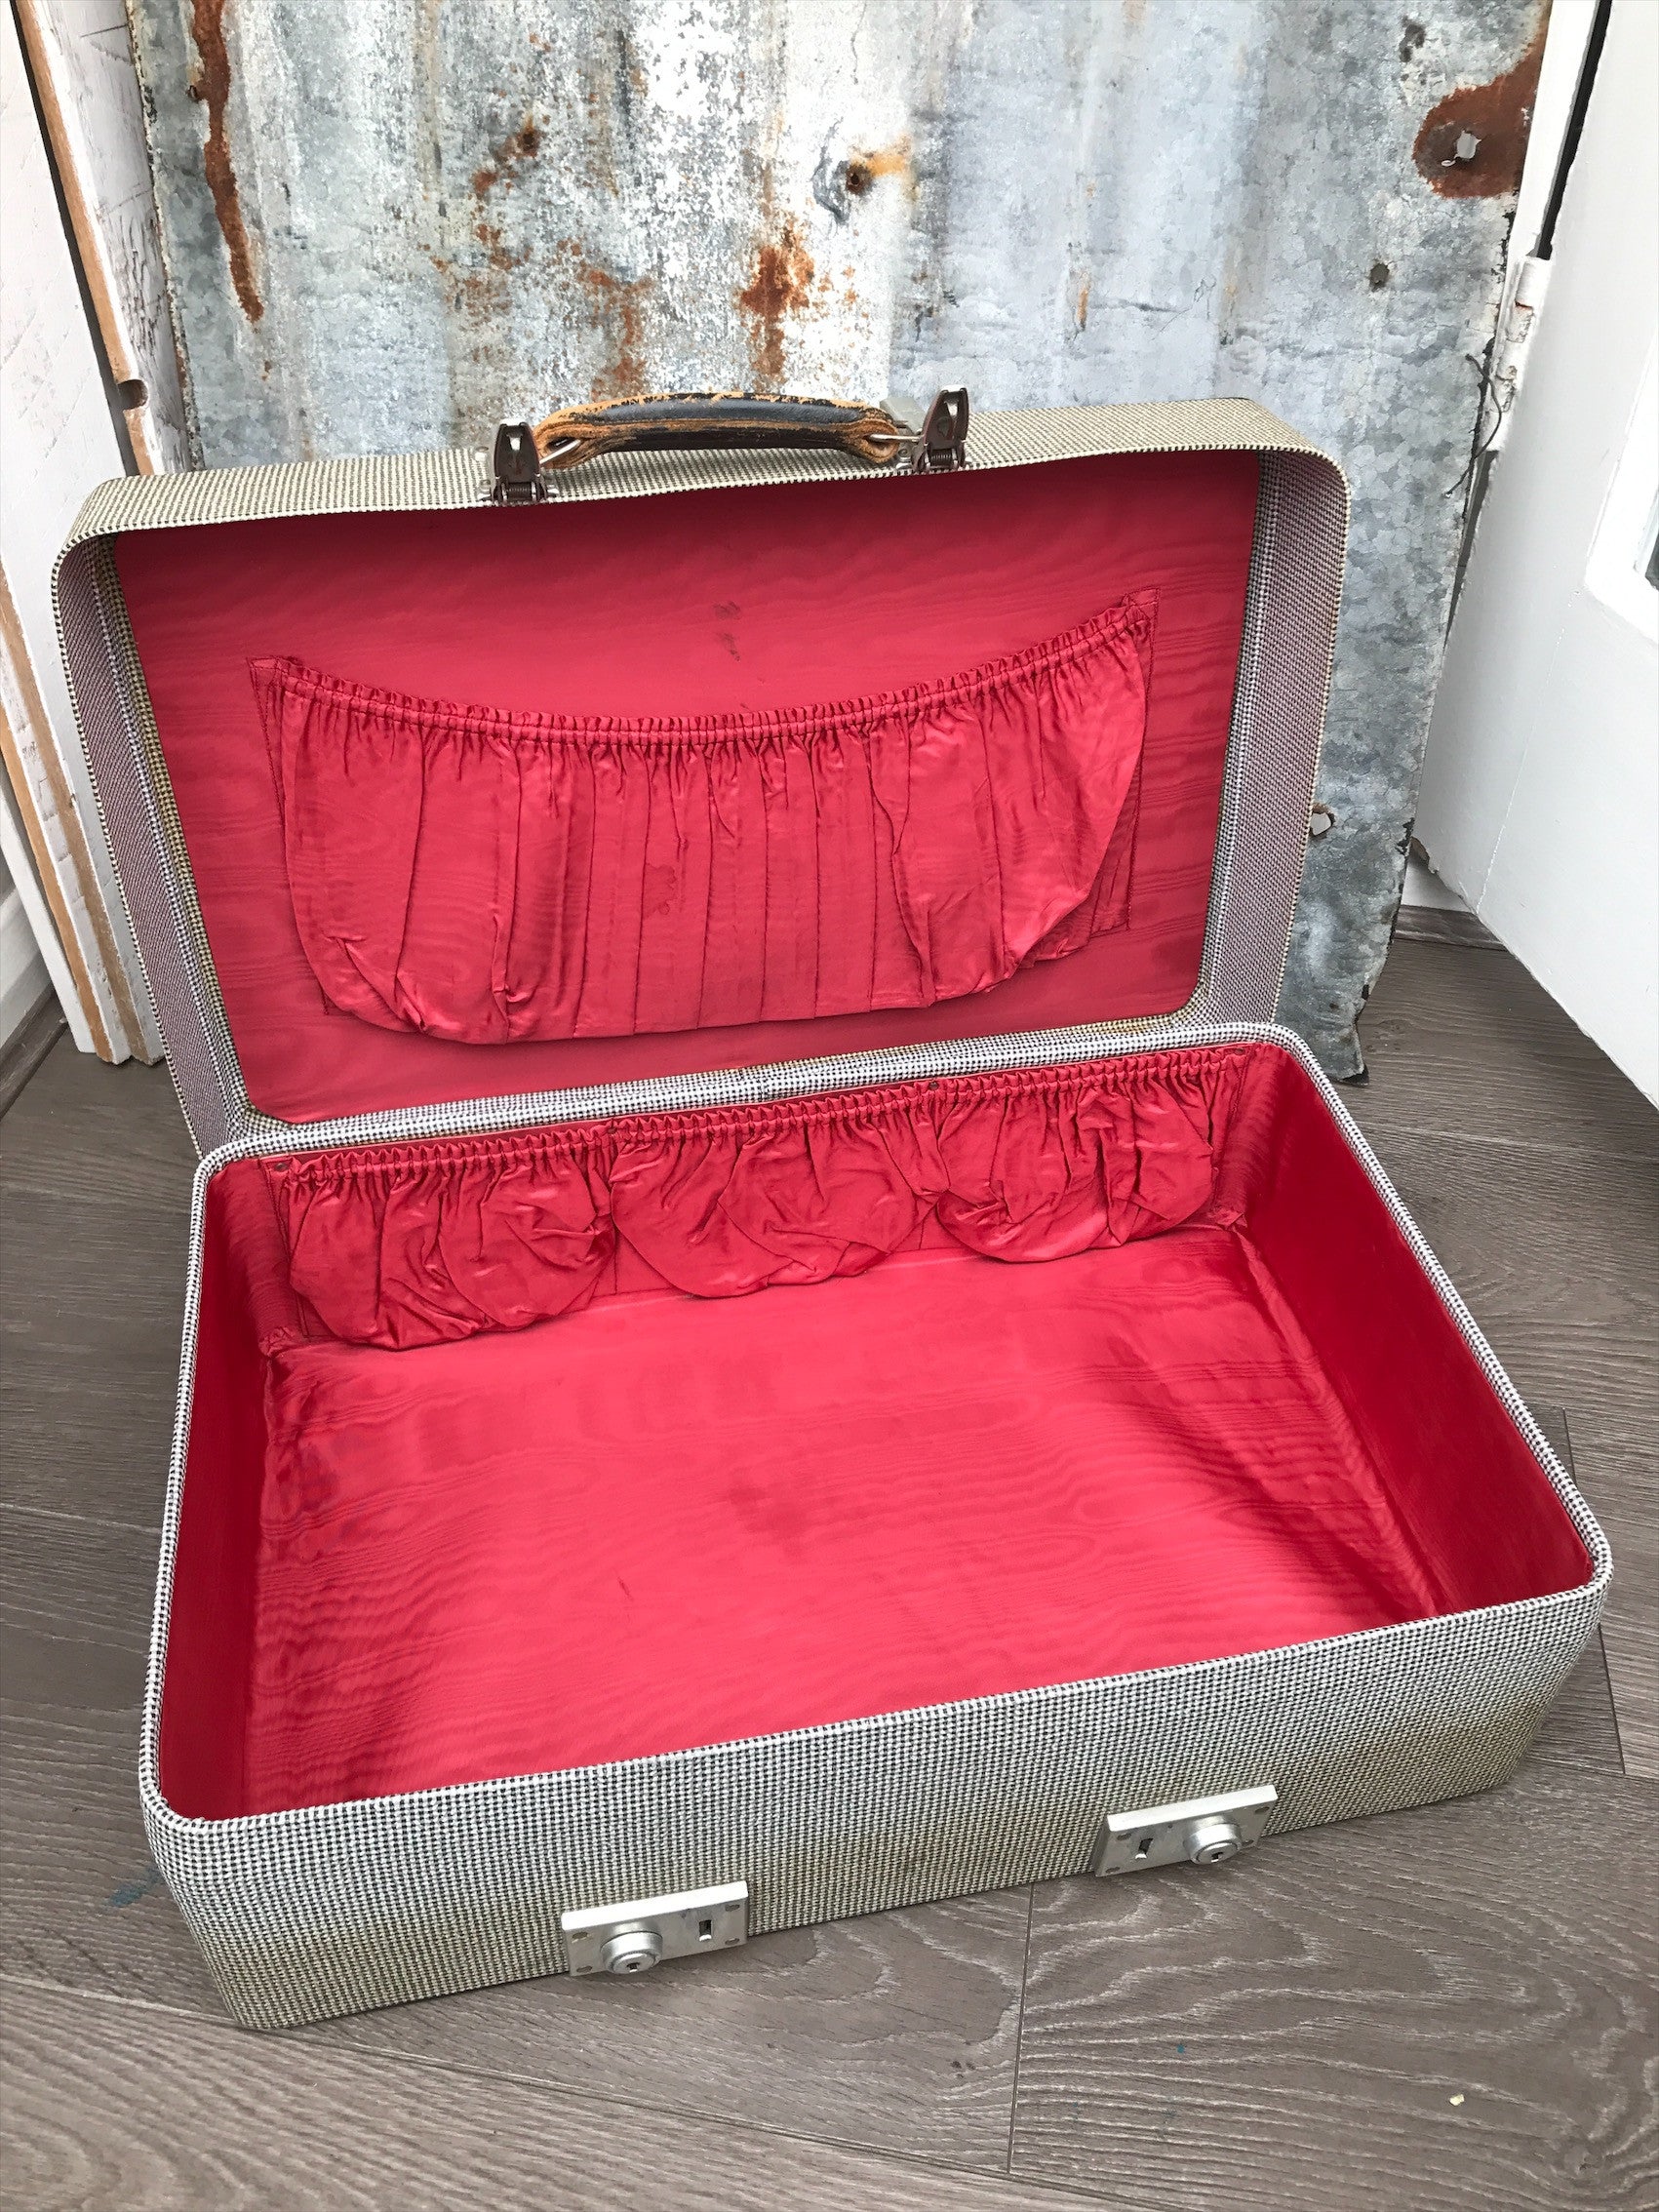 Vintage Cream and Black Suitcase